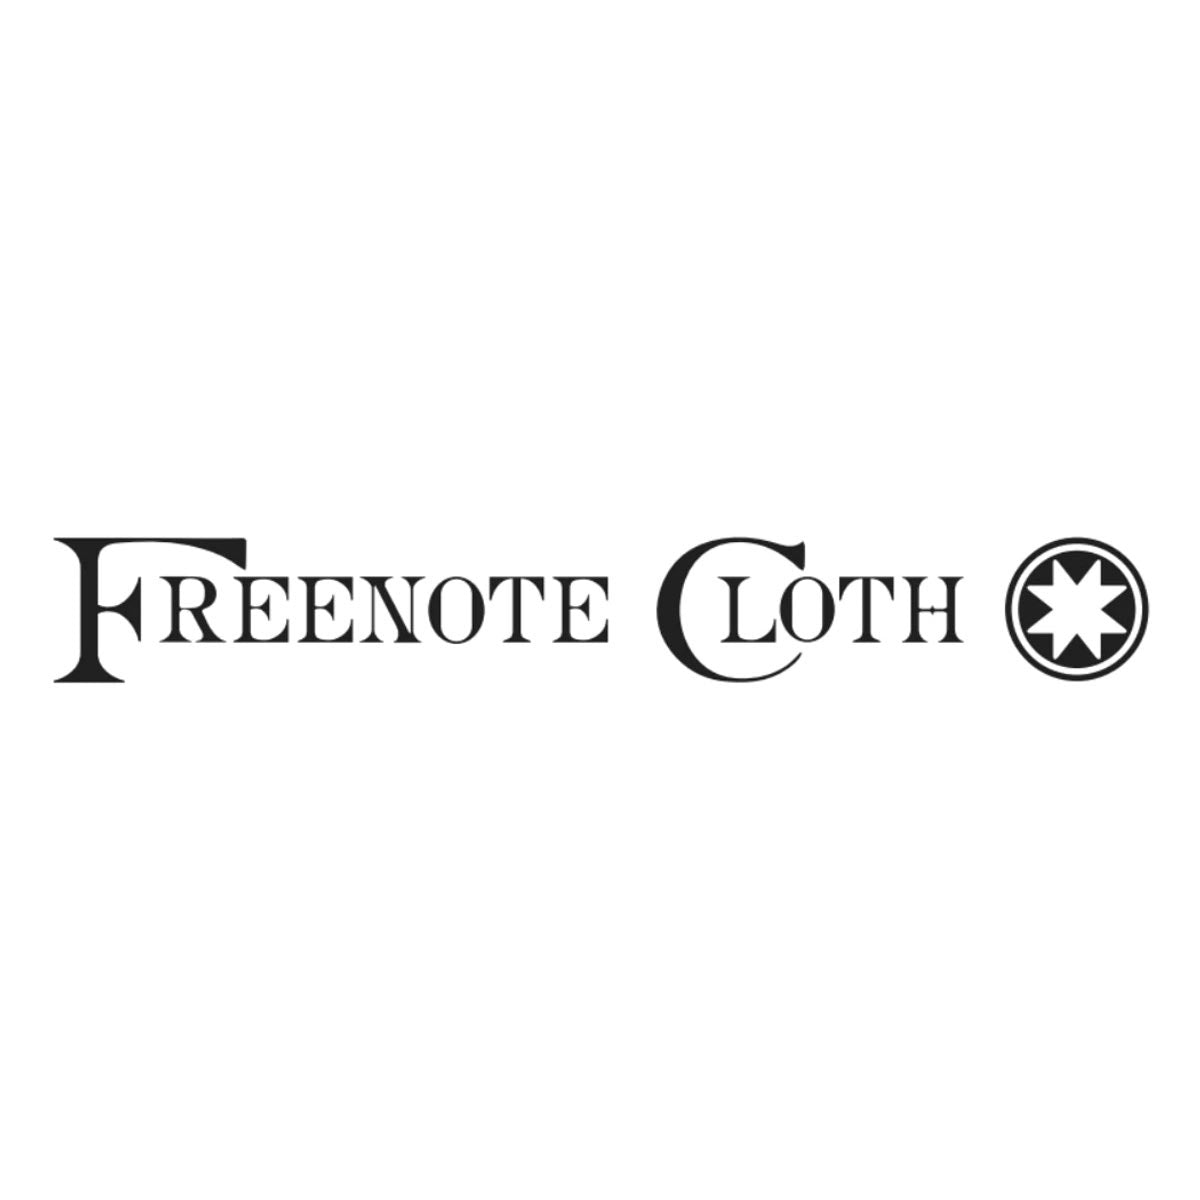 Freenote Cloth at REVOLVR